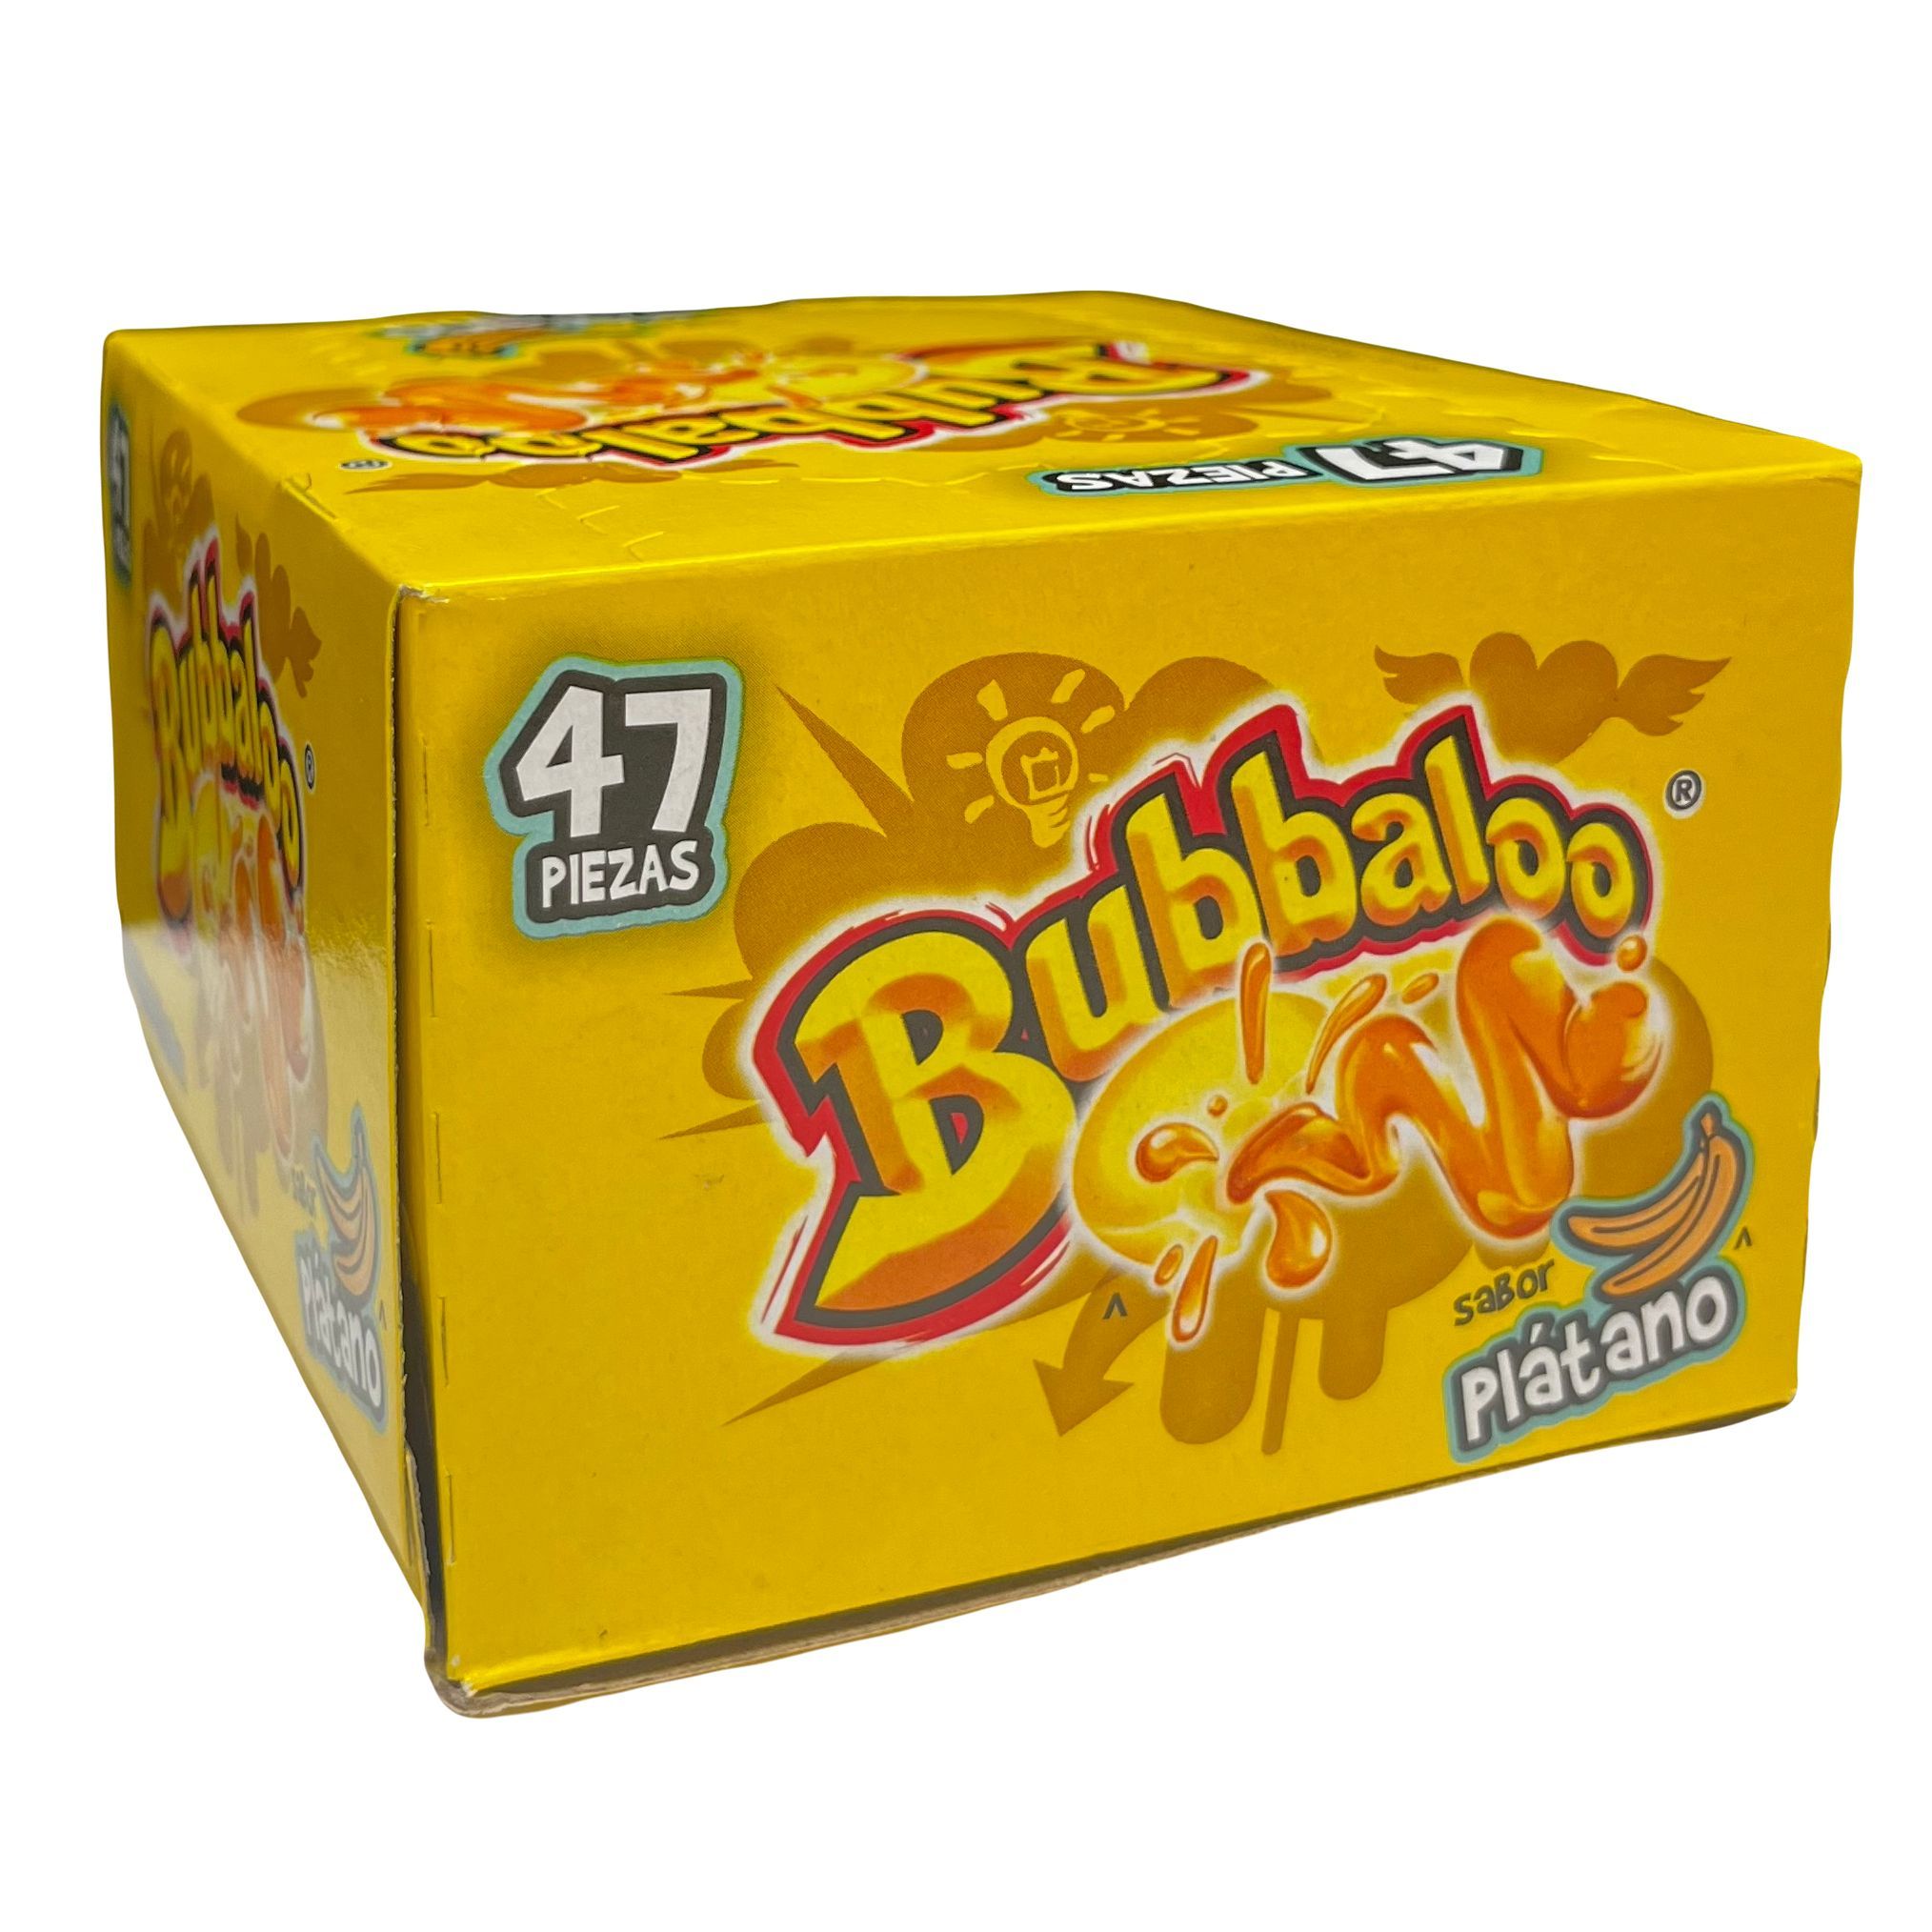 Adams - Bubbaloo Plantano (Banana) - Liquid Filled Bubblegum - 1pc (Mexico)